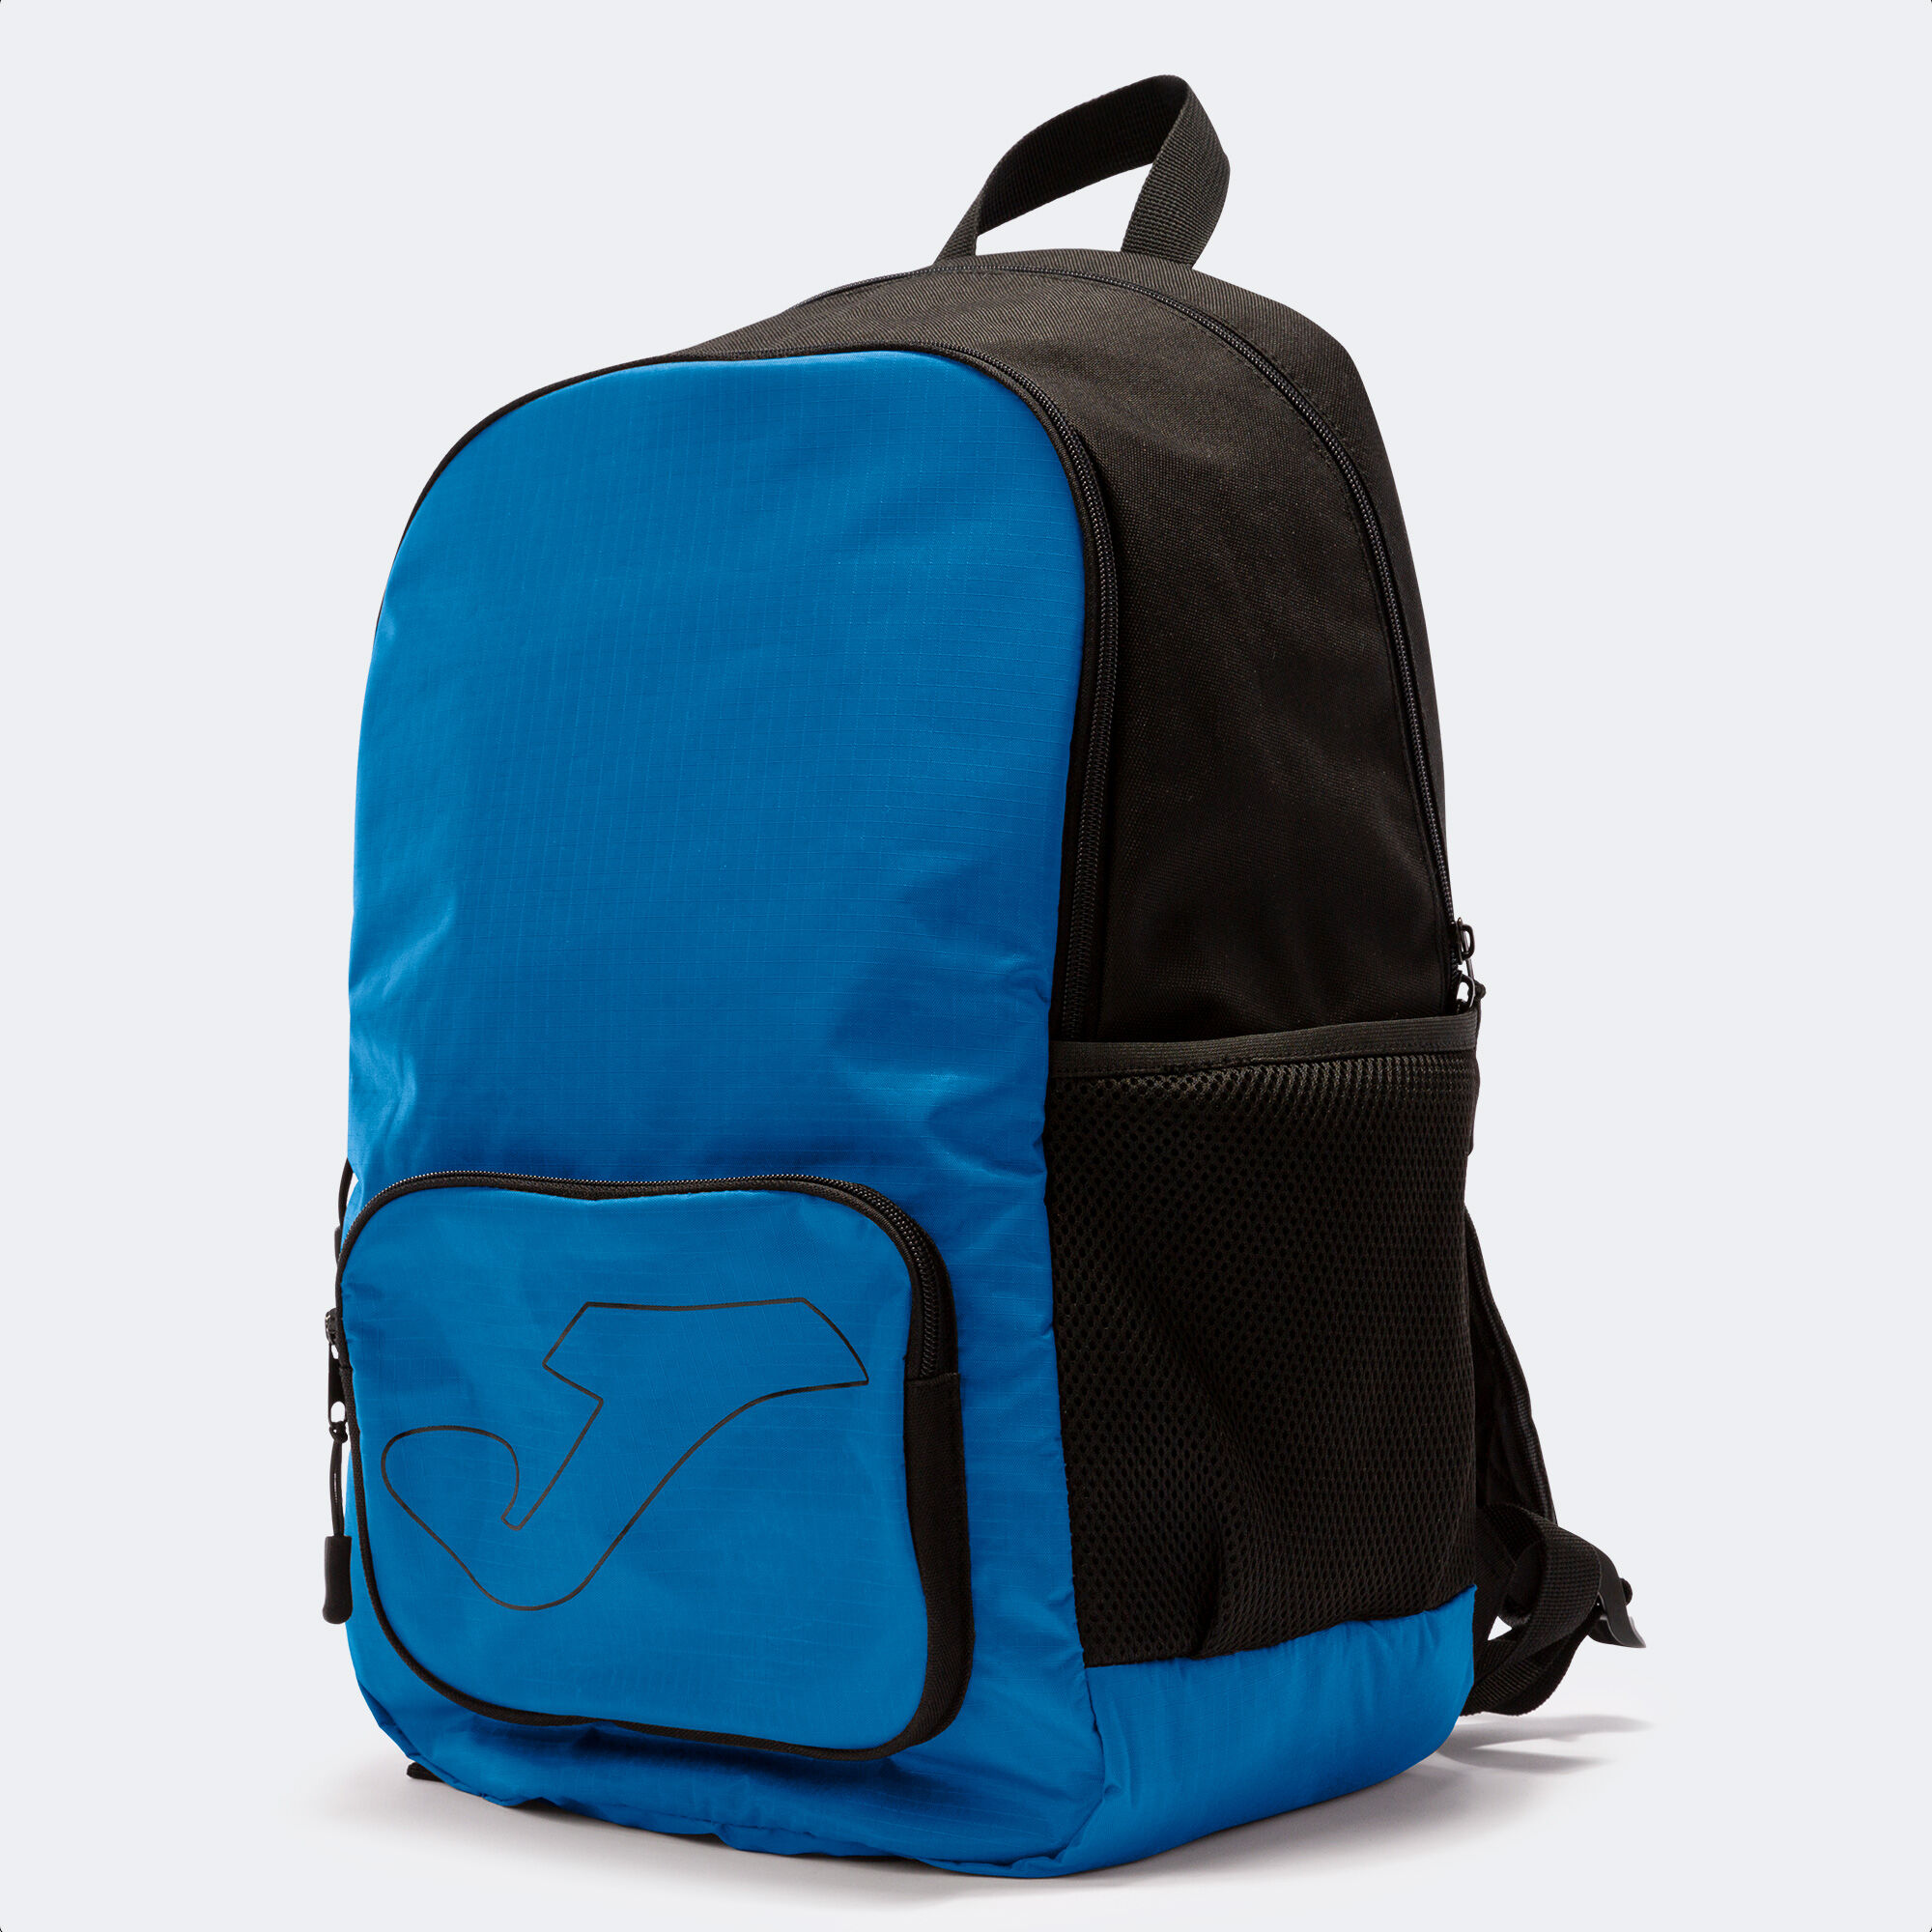 Backpack - shoe bag Academy black fluorescent turquoise